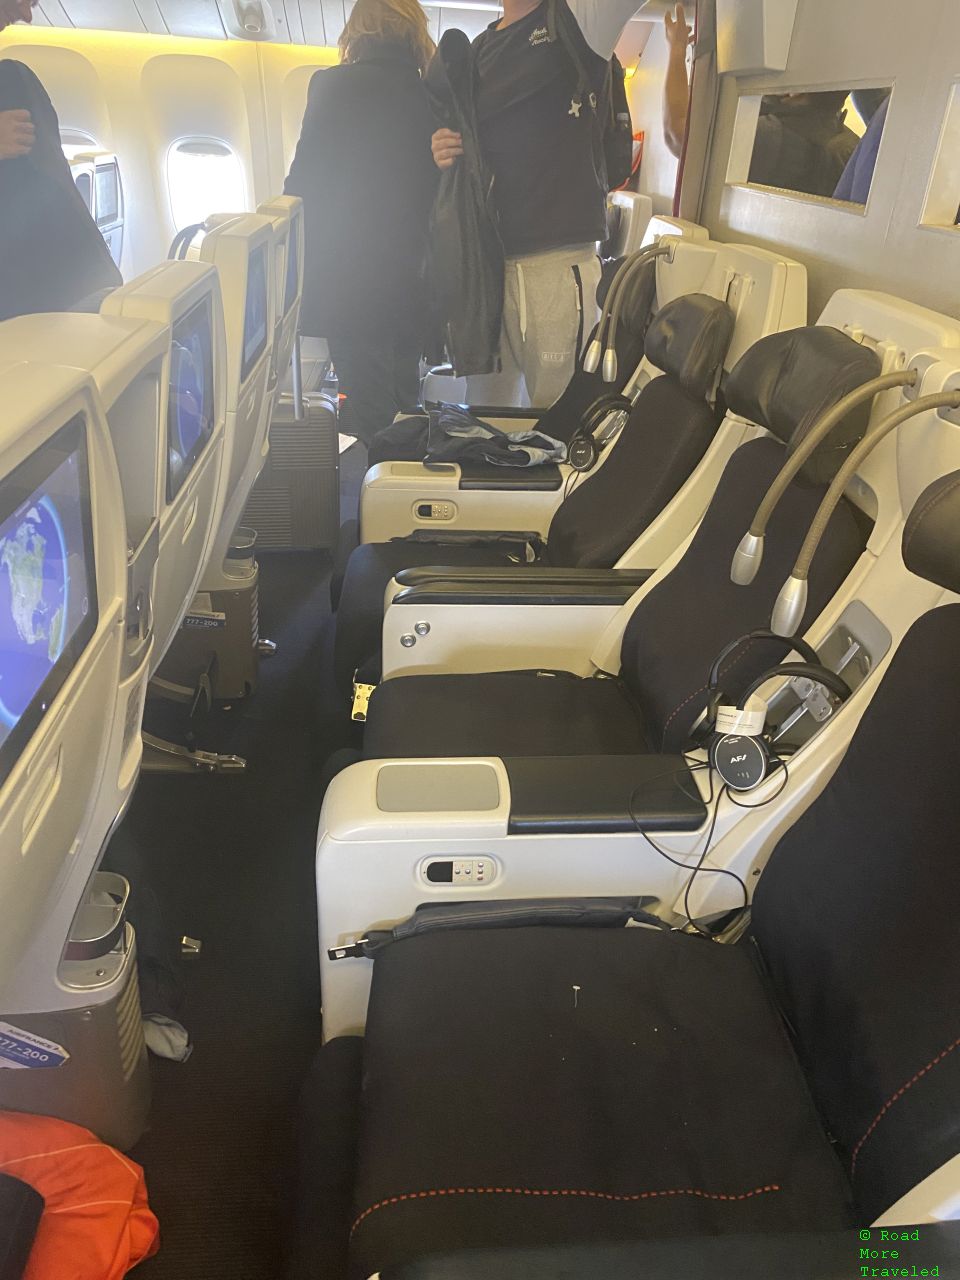 Air France B772 Premium Economy cabin